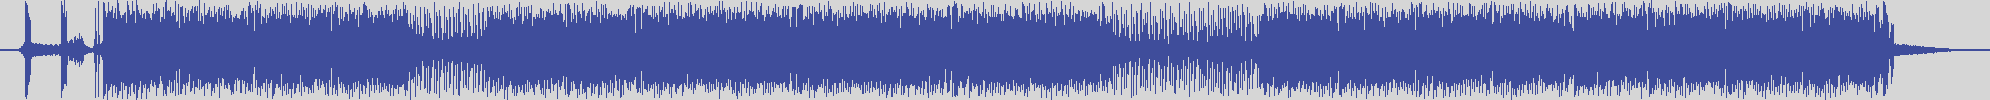 nf_boyz_records [NFY018] Steven Mc - Get Down [Hard House Mix] audio wave form